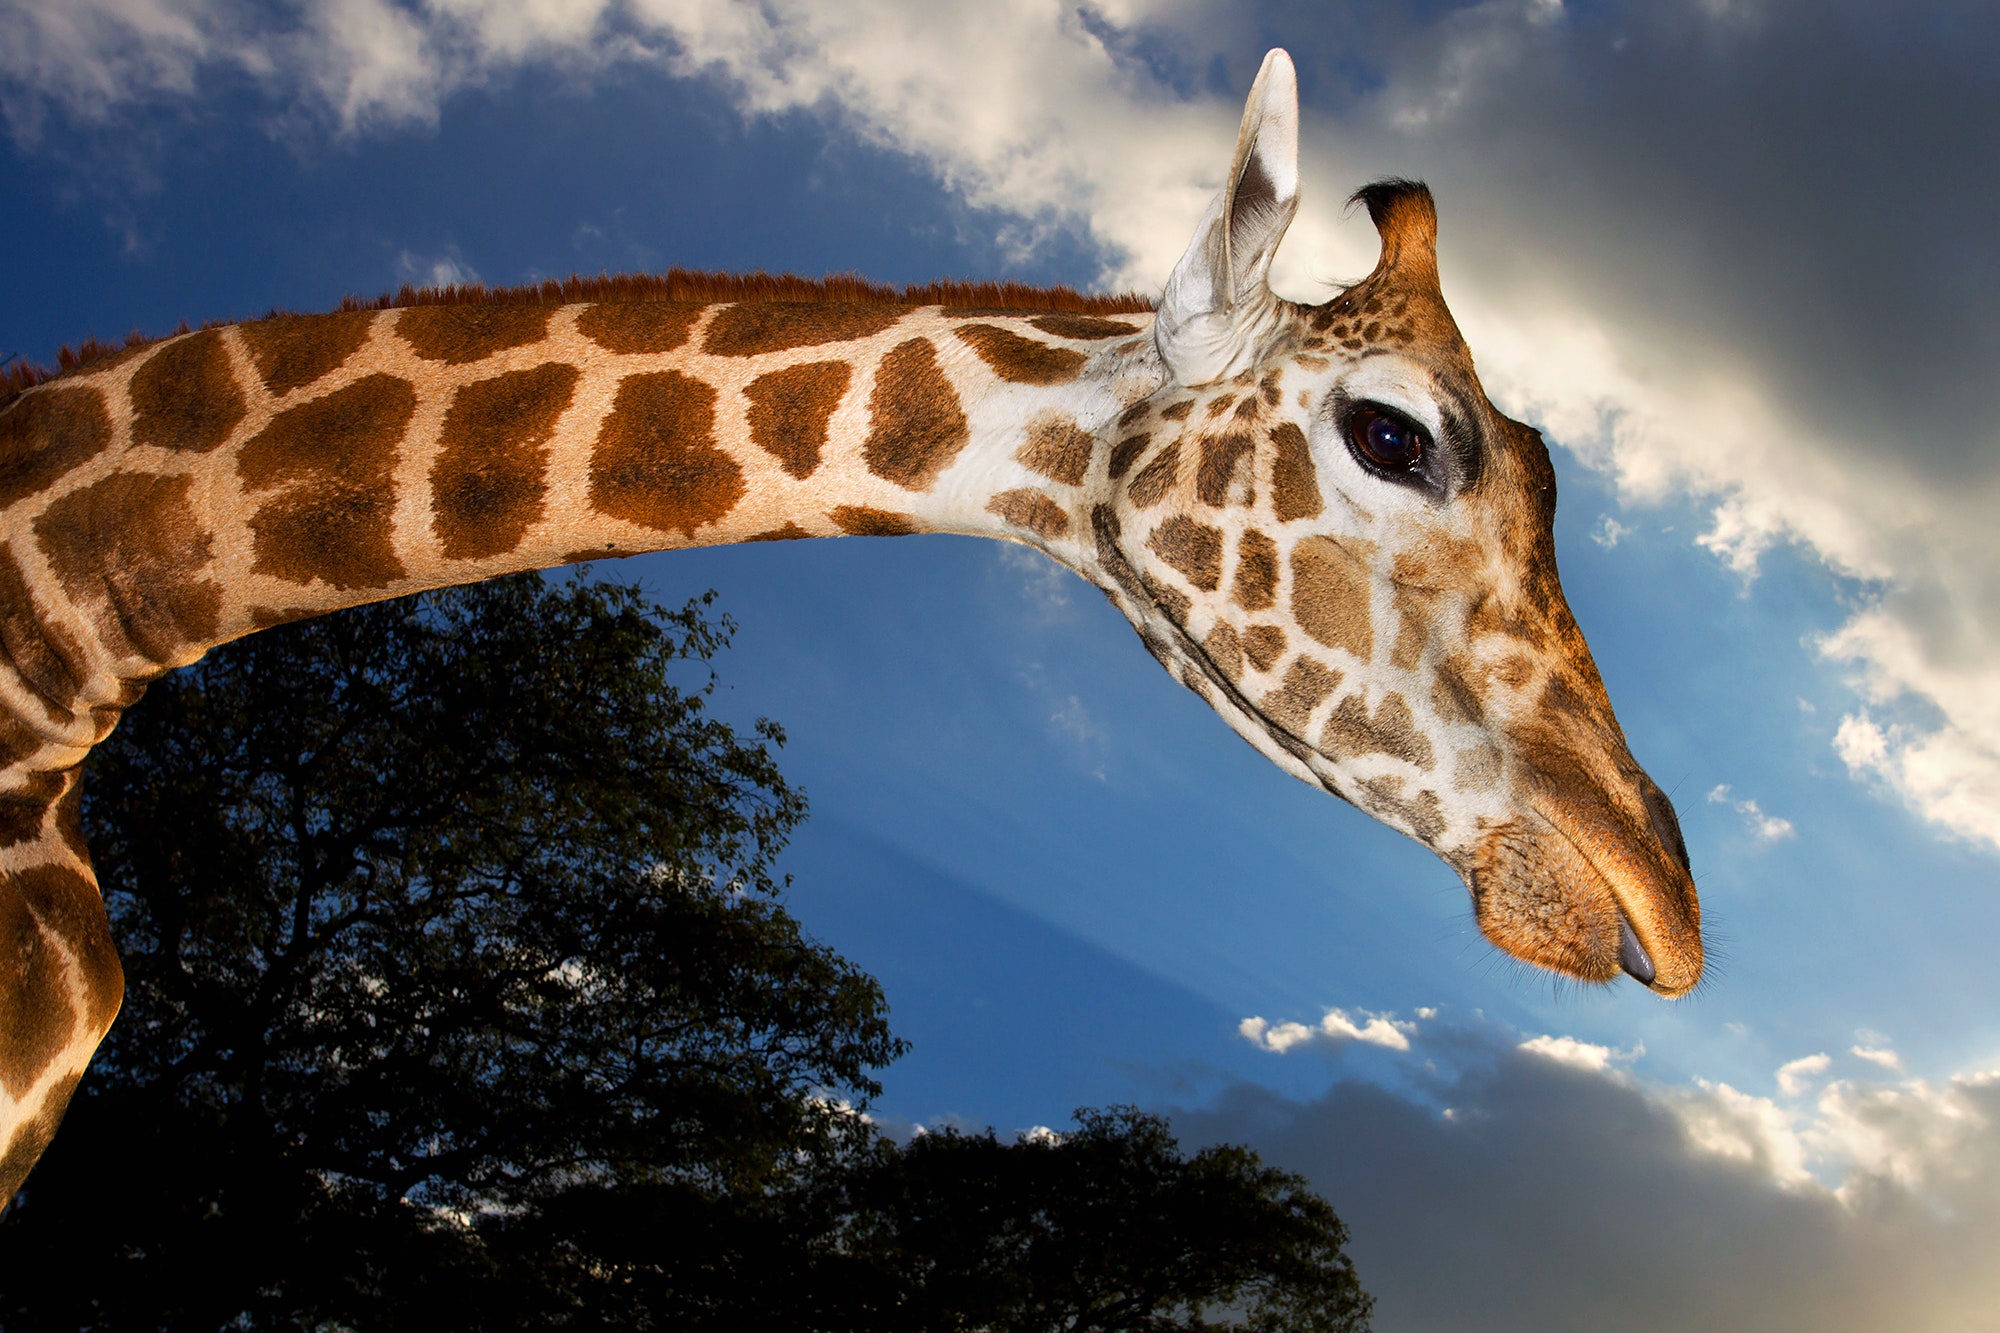 Does a giraffe have a voice box?